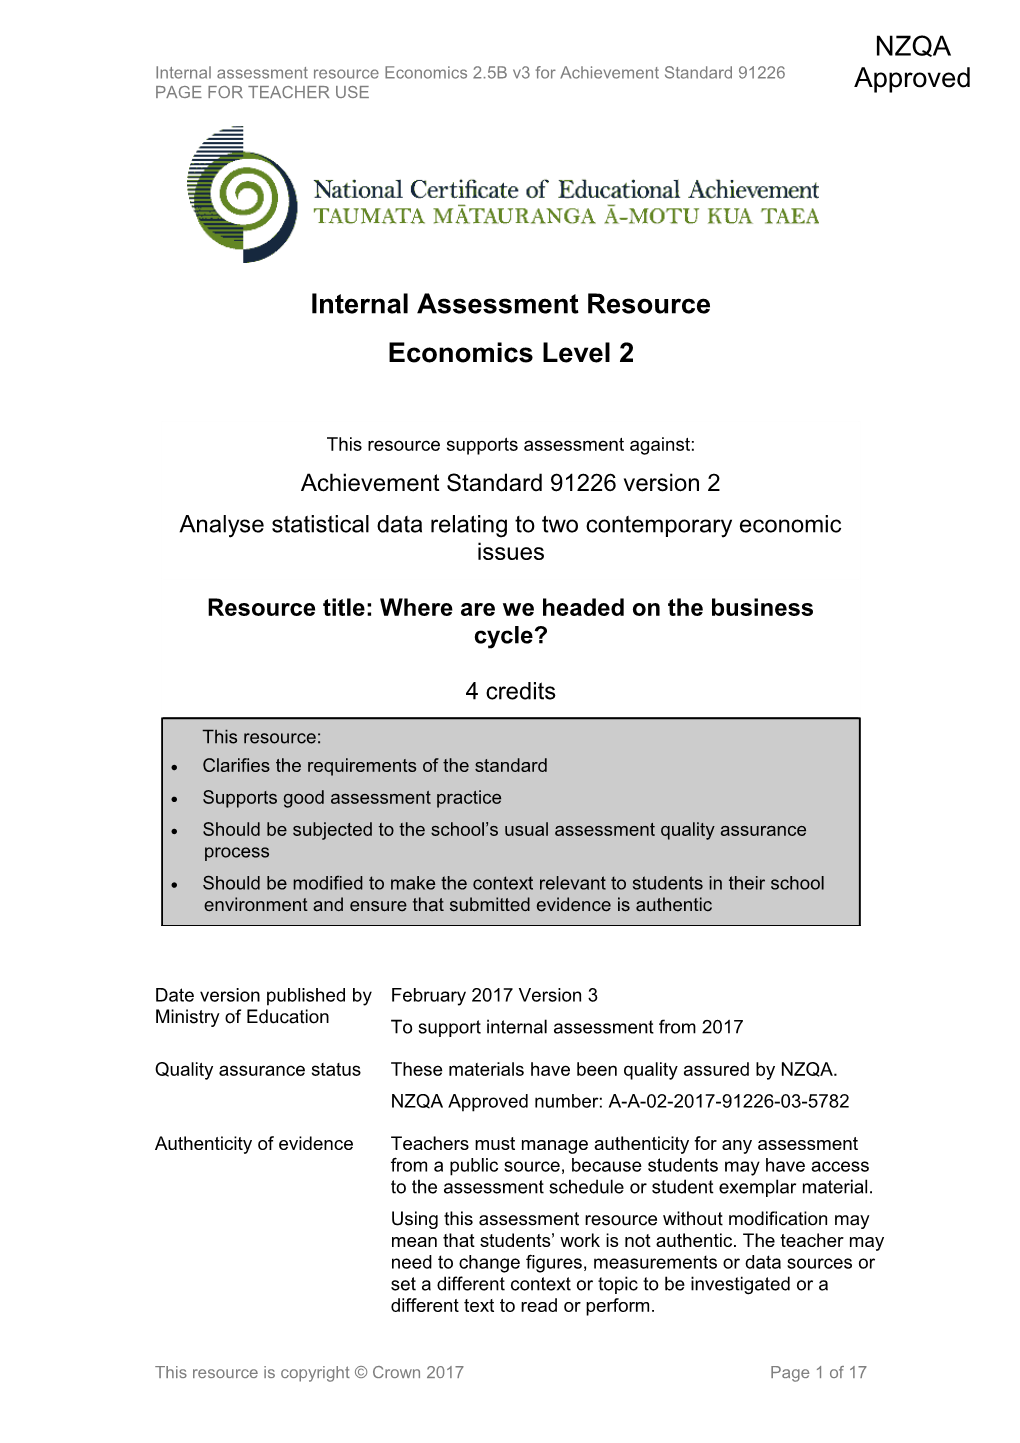 Level 2 Economics Internal Assessment Resource